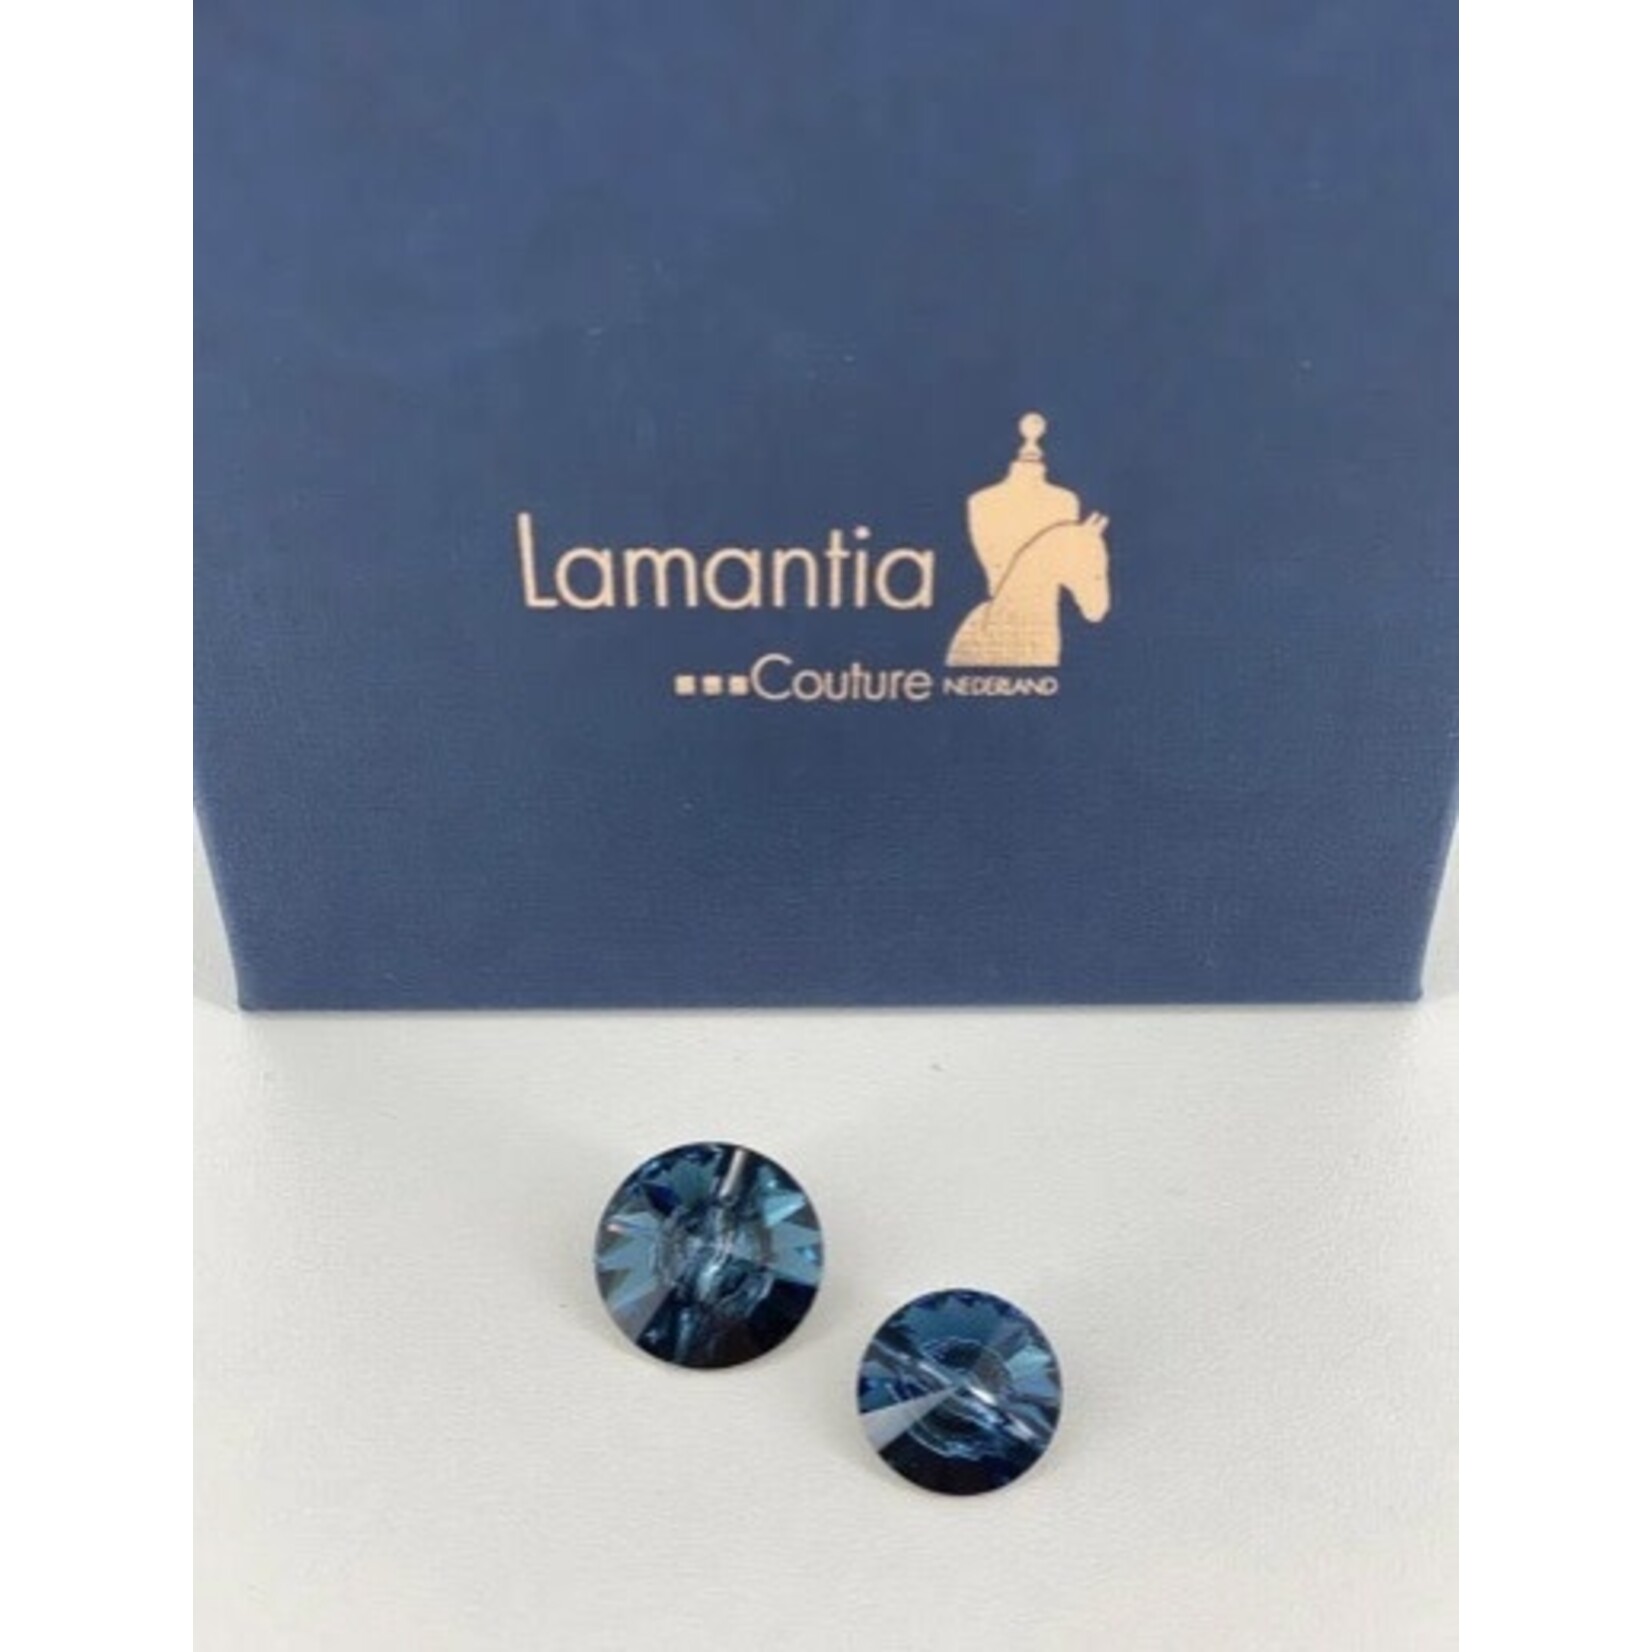 Lamantia Couture Nederland Swarovski knoop crystal montana klein met achterkant 14mm